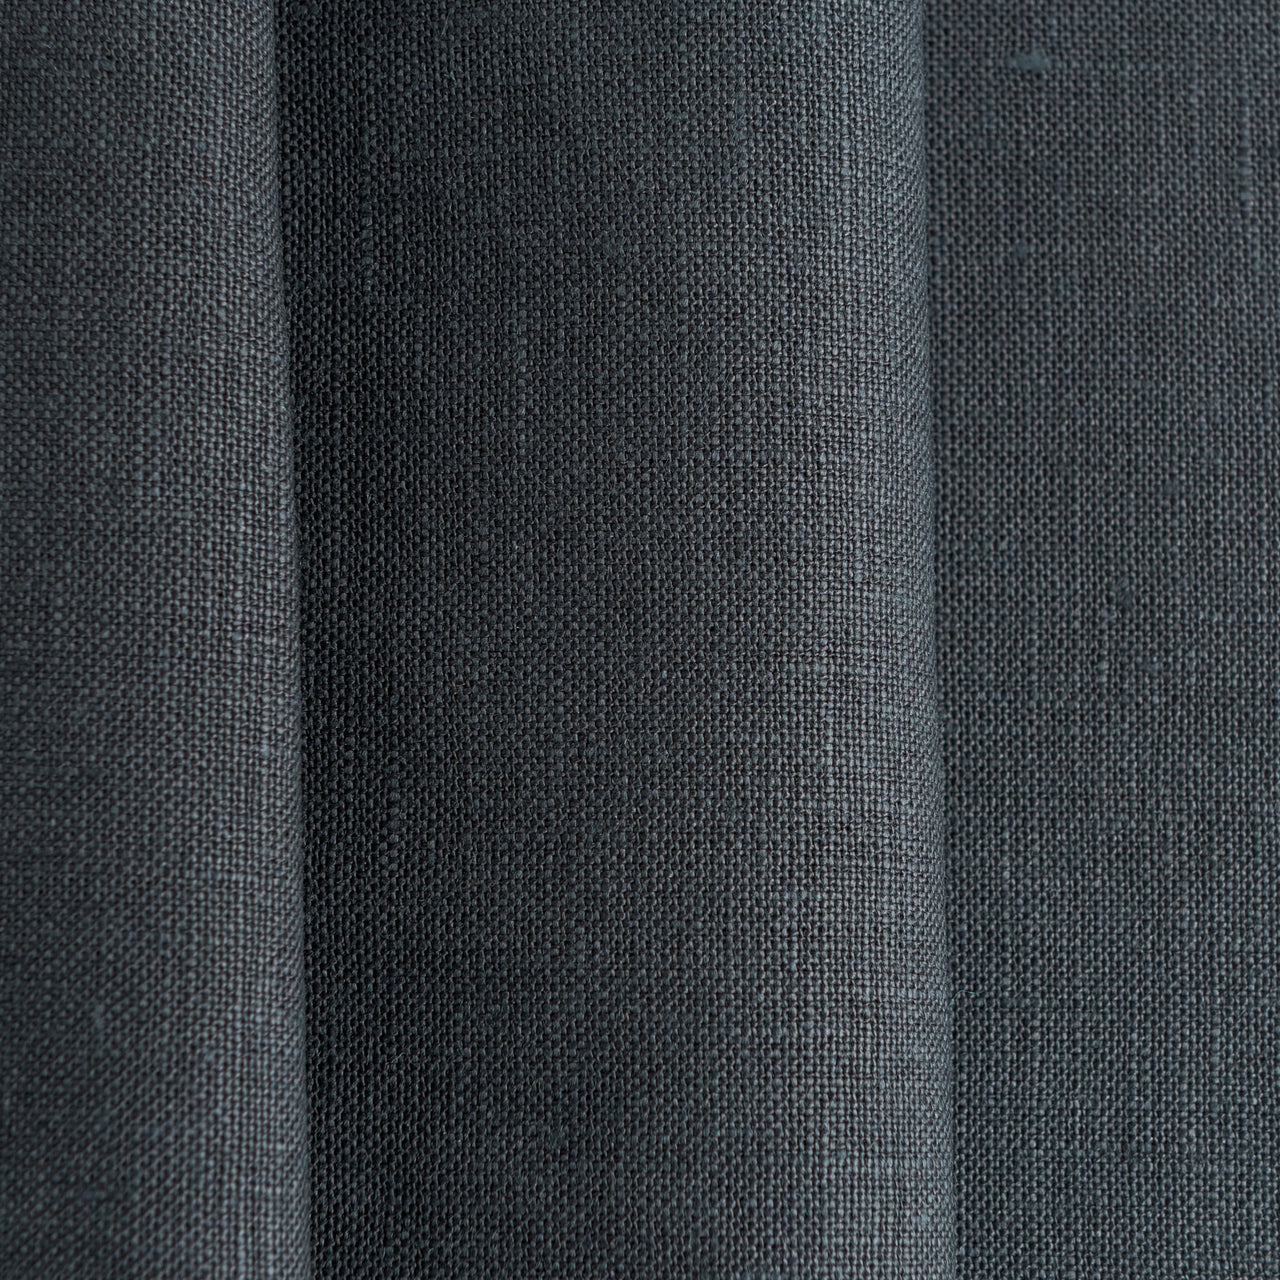 Charcoal Linen Fabric